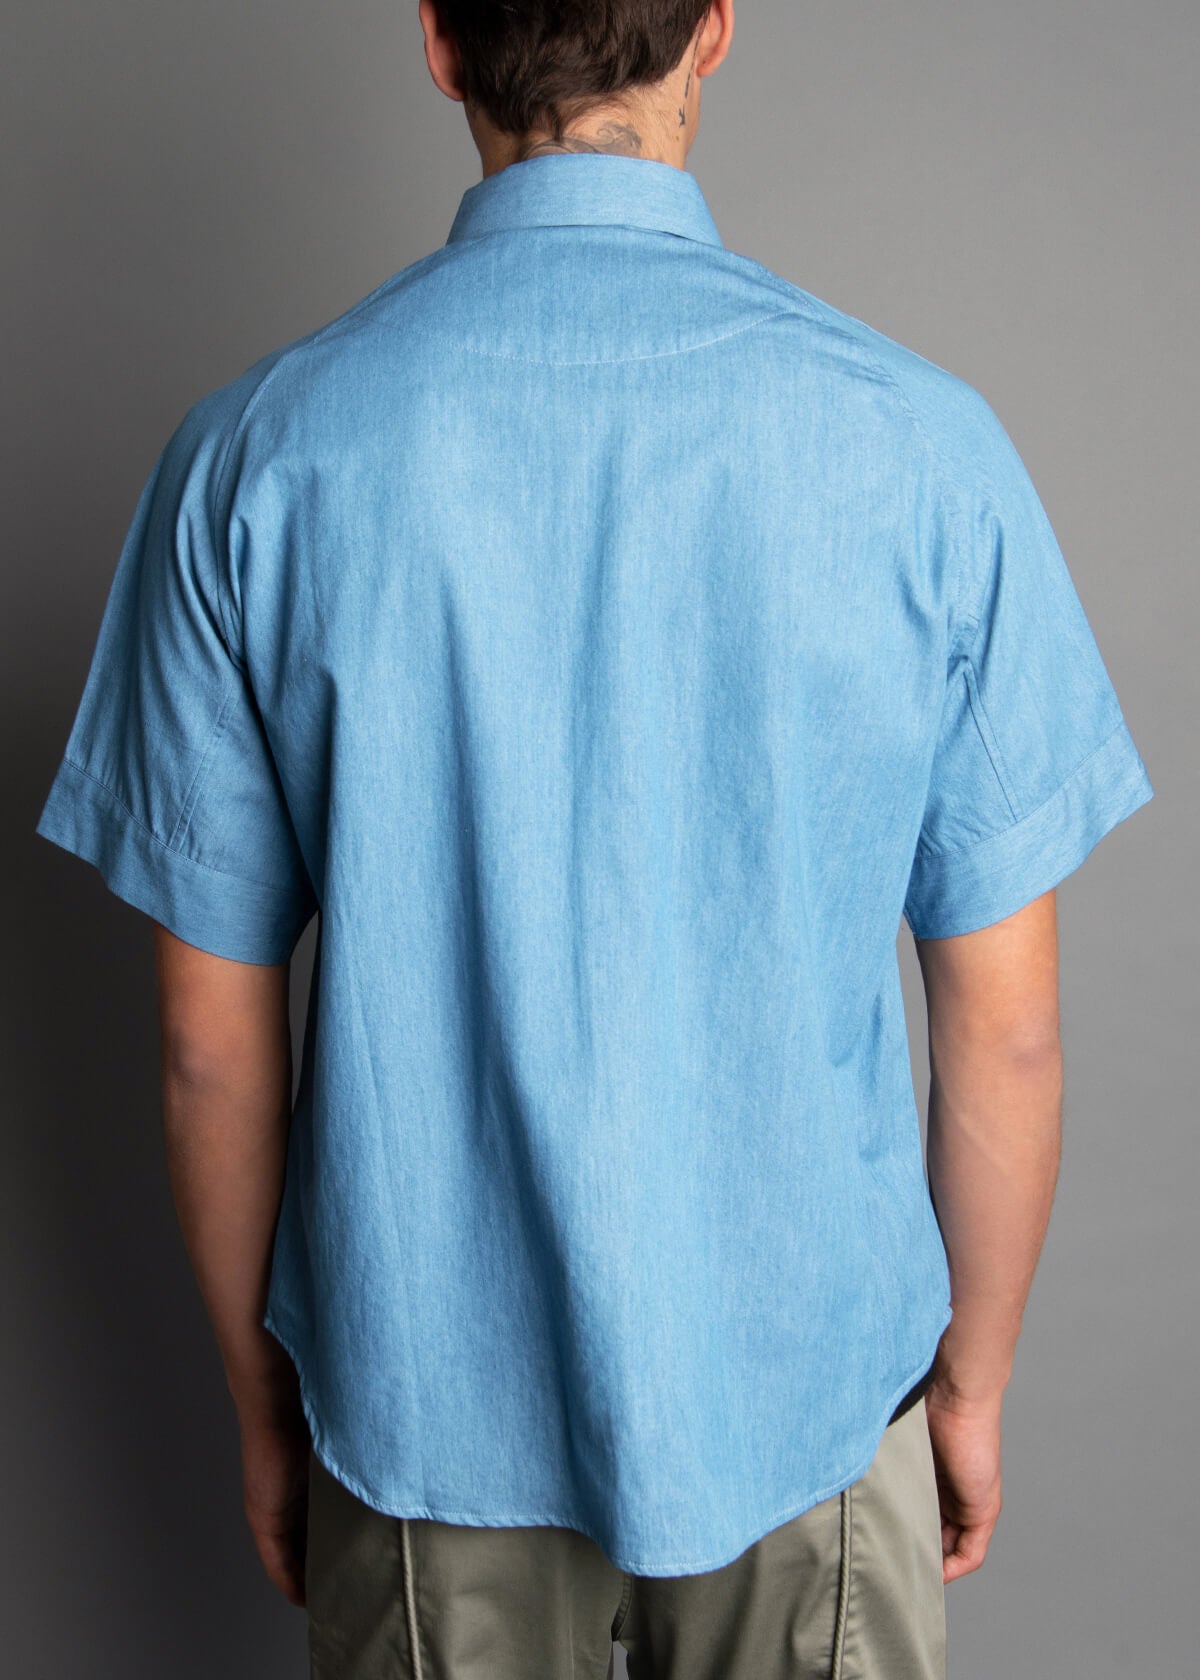 men's short sleeve denim shirt